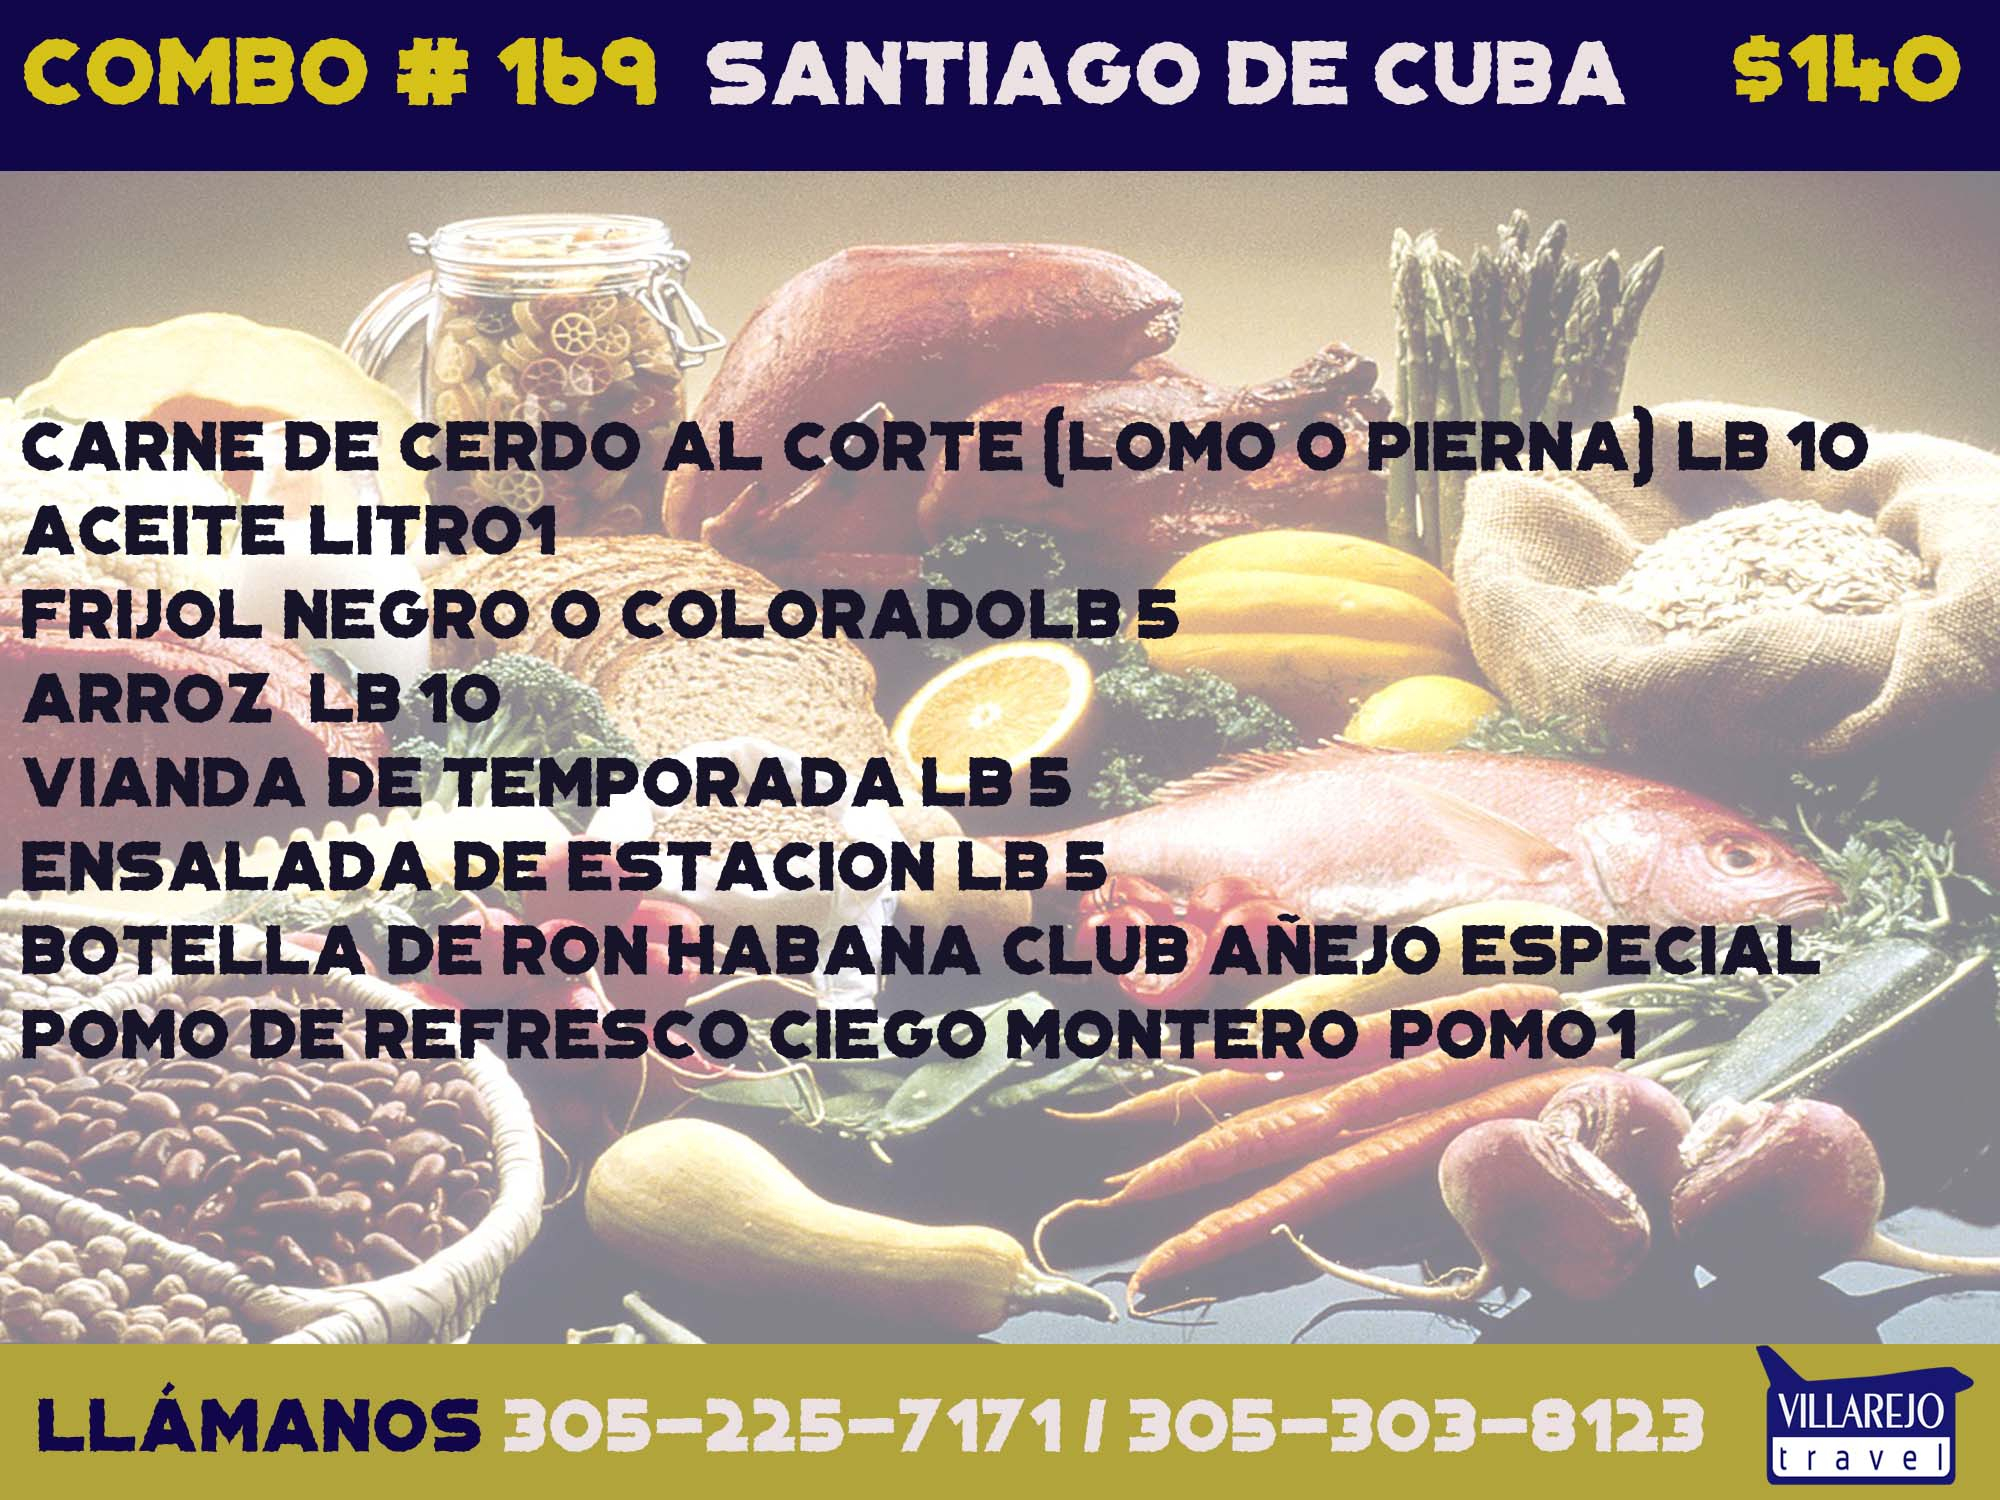 COMBO  # 169 SANTIAGO DE CUBA